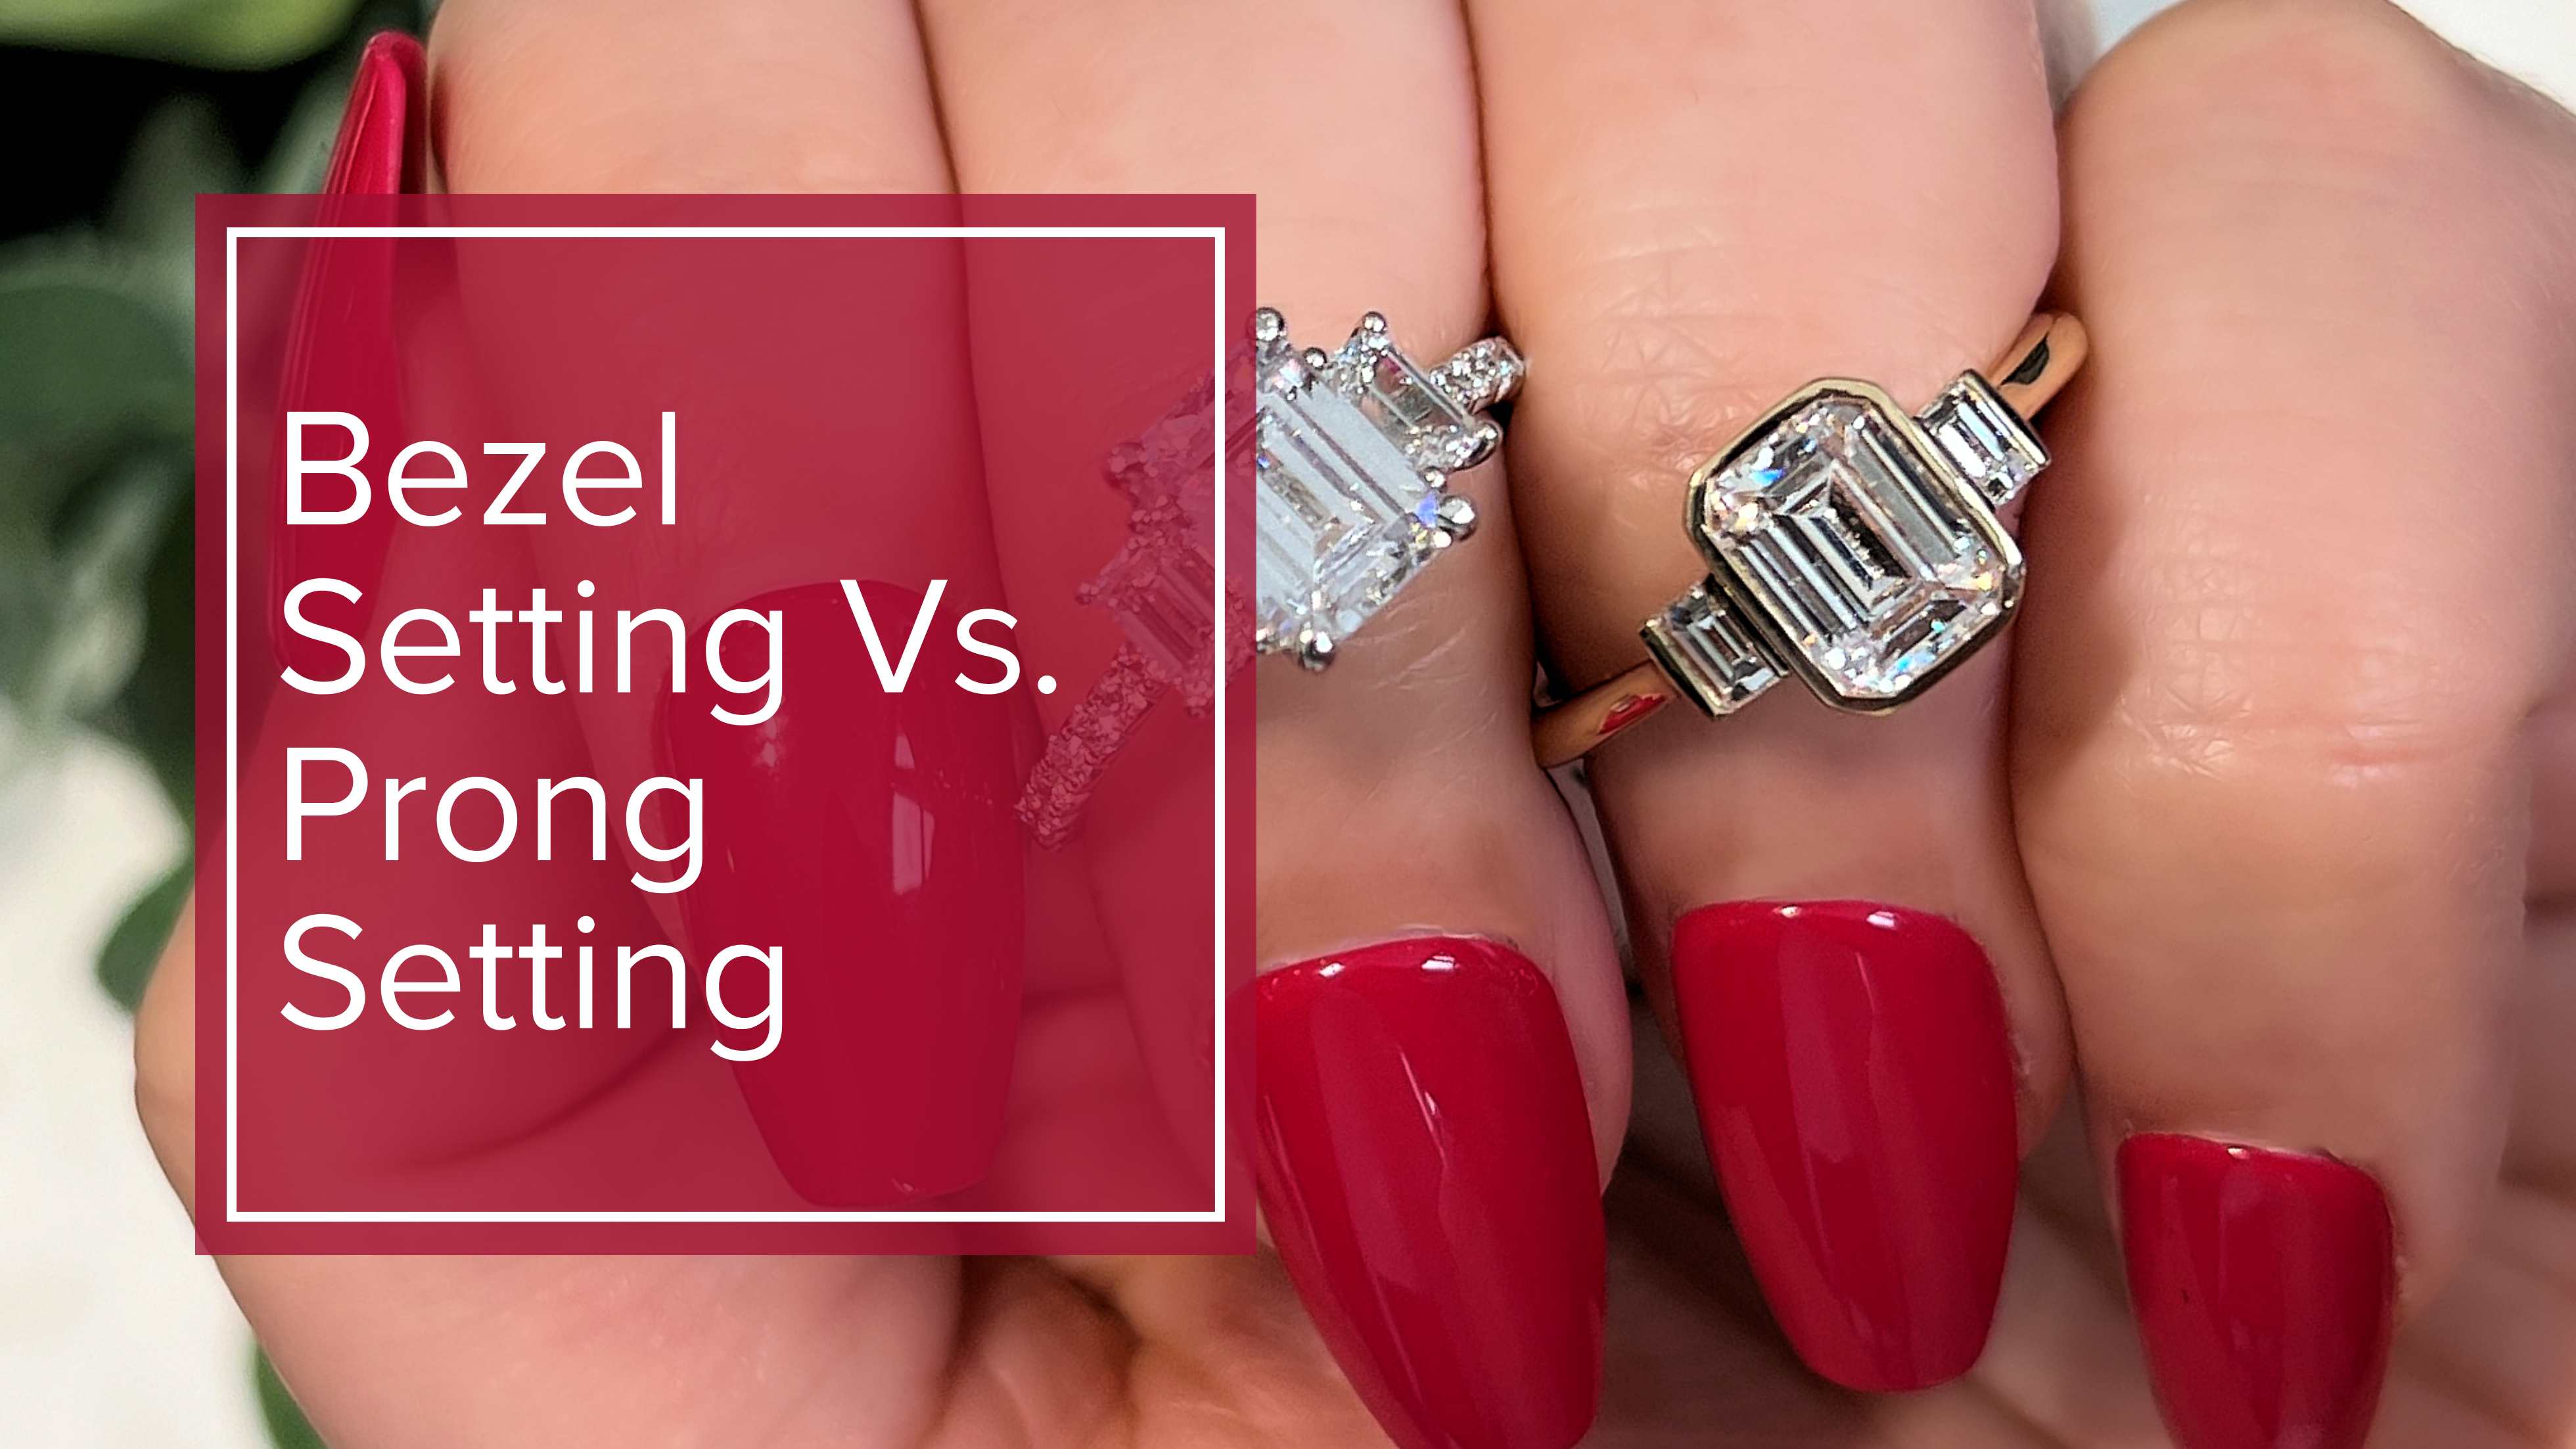 Bezel Setting engagement ring vs prong setting engagement ring